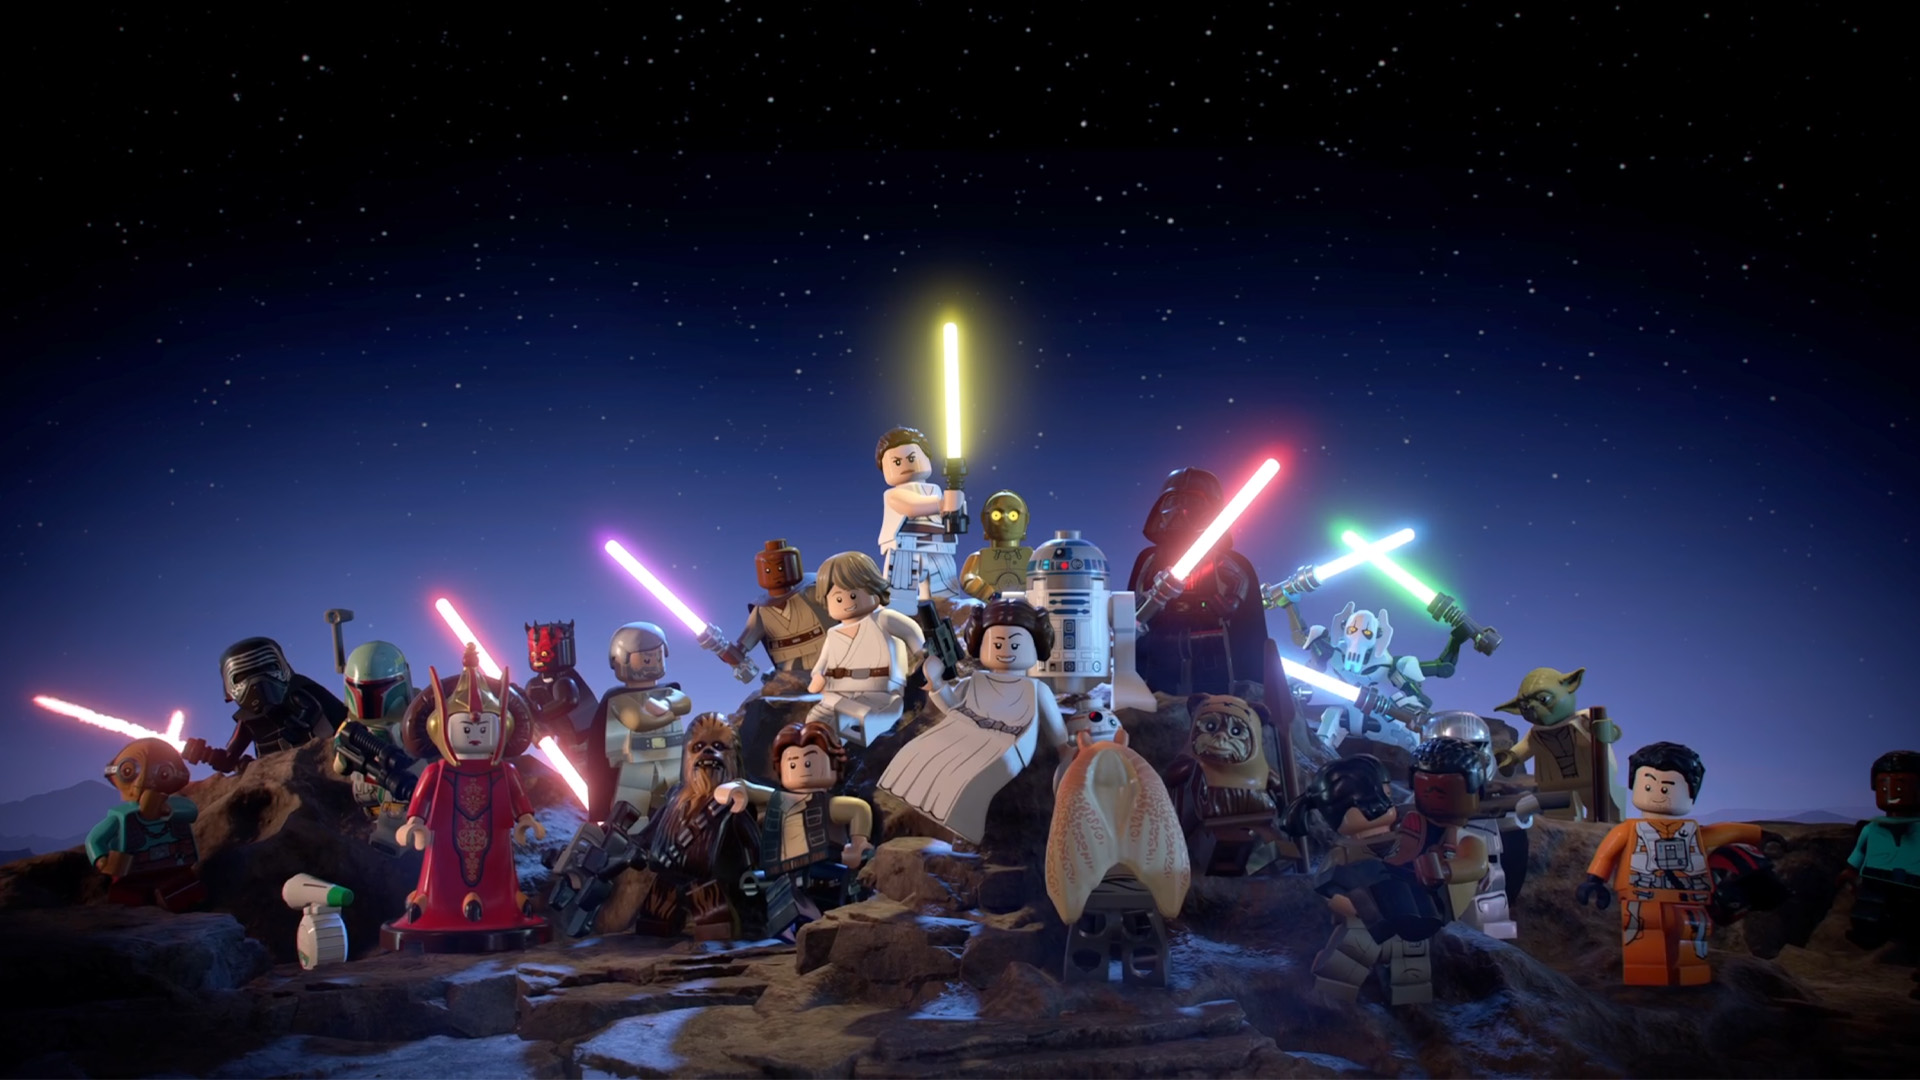 All Lego Star Wars The Skywalker Saga characters